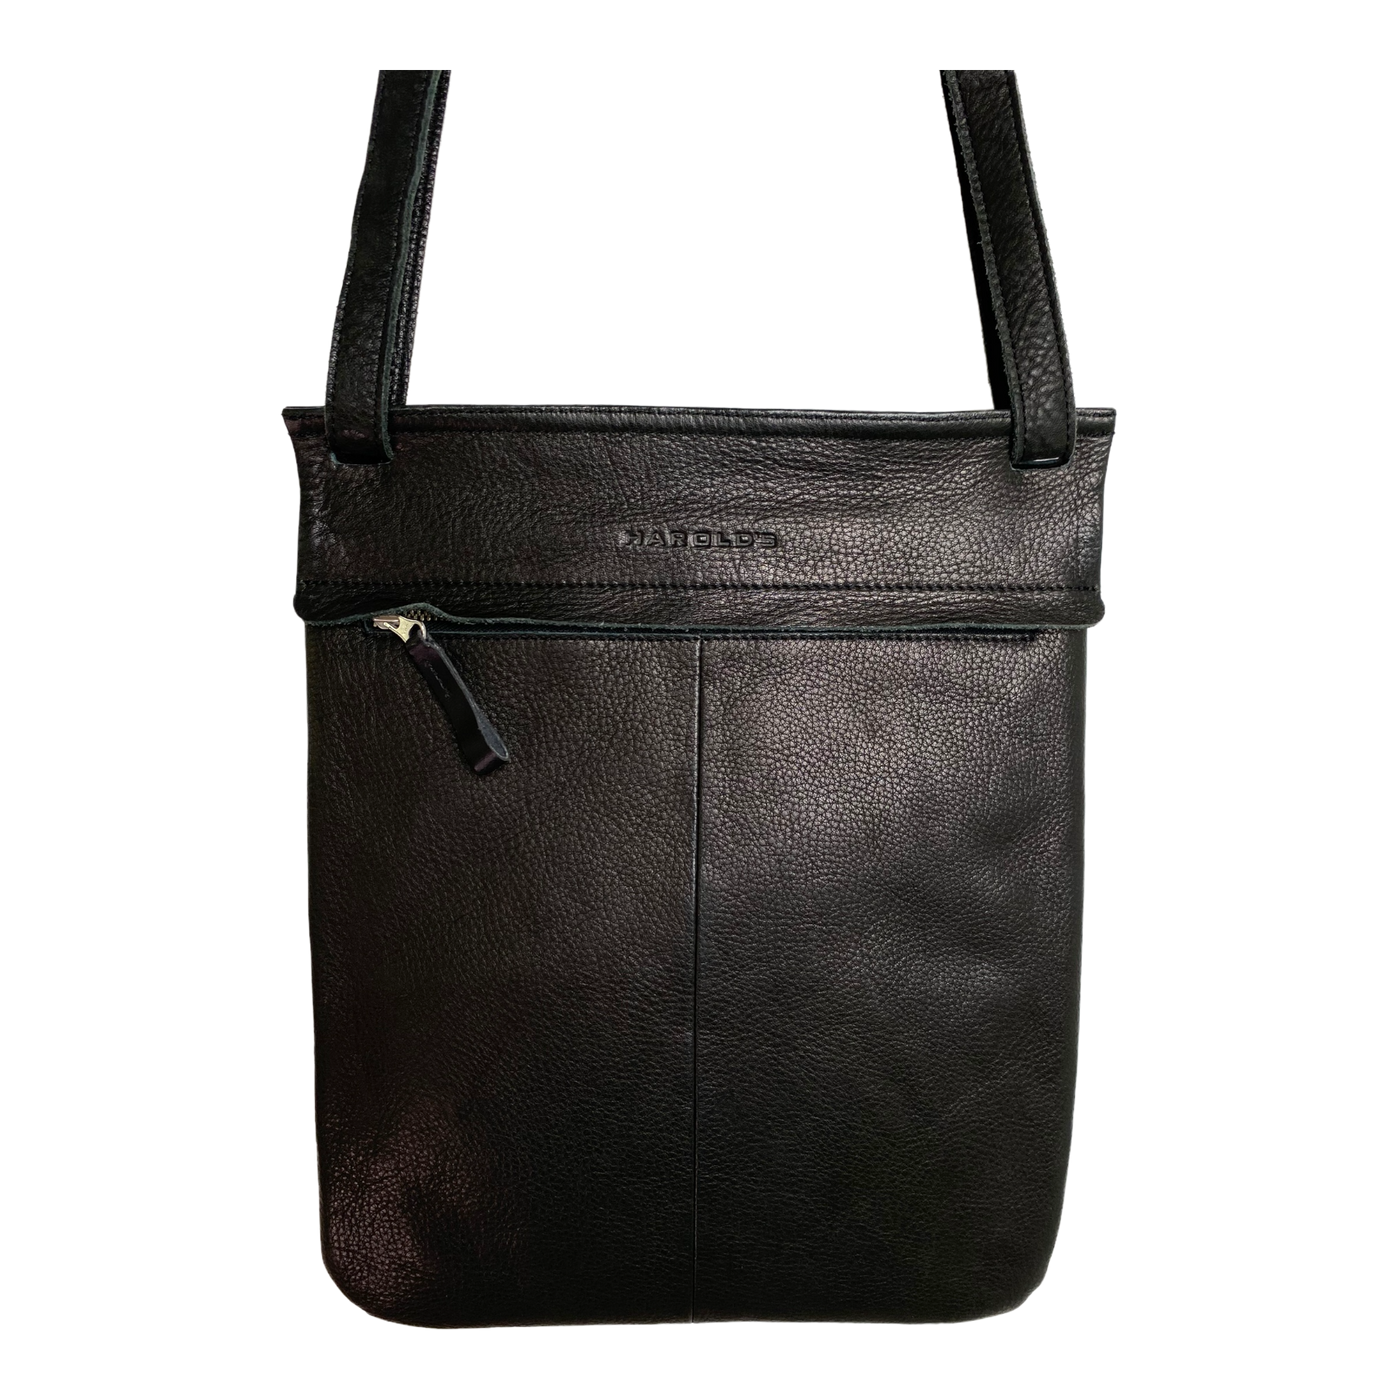 Harold's Bags leather chacoral smooth shoulder bag, black